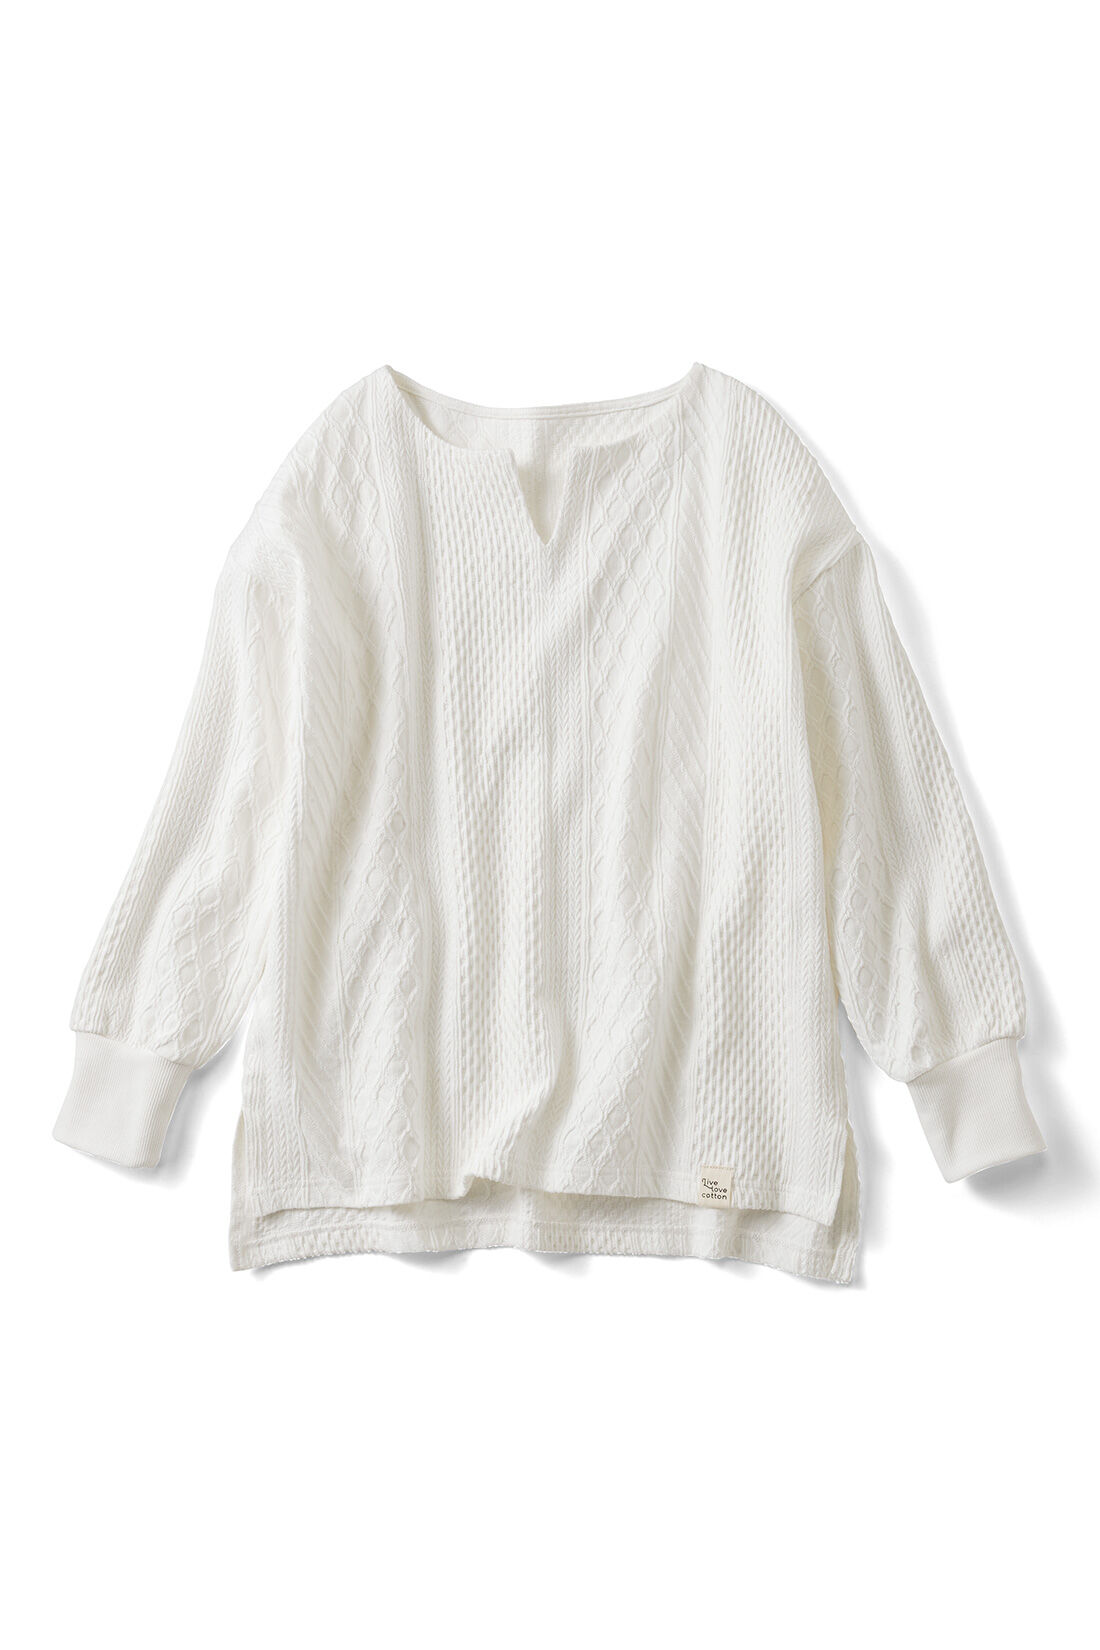 Real Stock|Live love cottonプロジェクト　リブ イン コンフォート　編み柄が素敵な袖口リブオーガニックコットントップス〈ホワイト〉|ホワイト